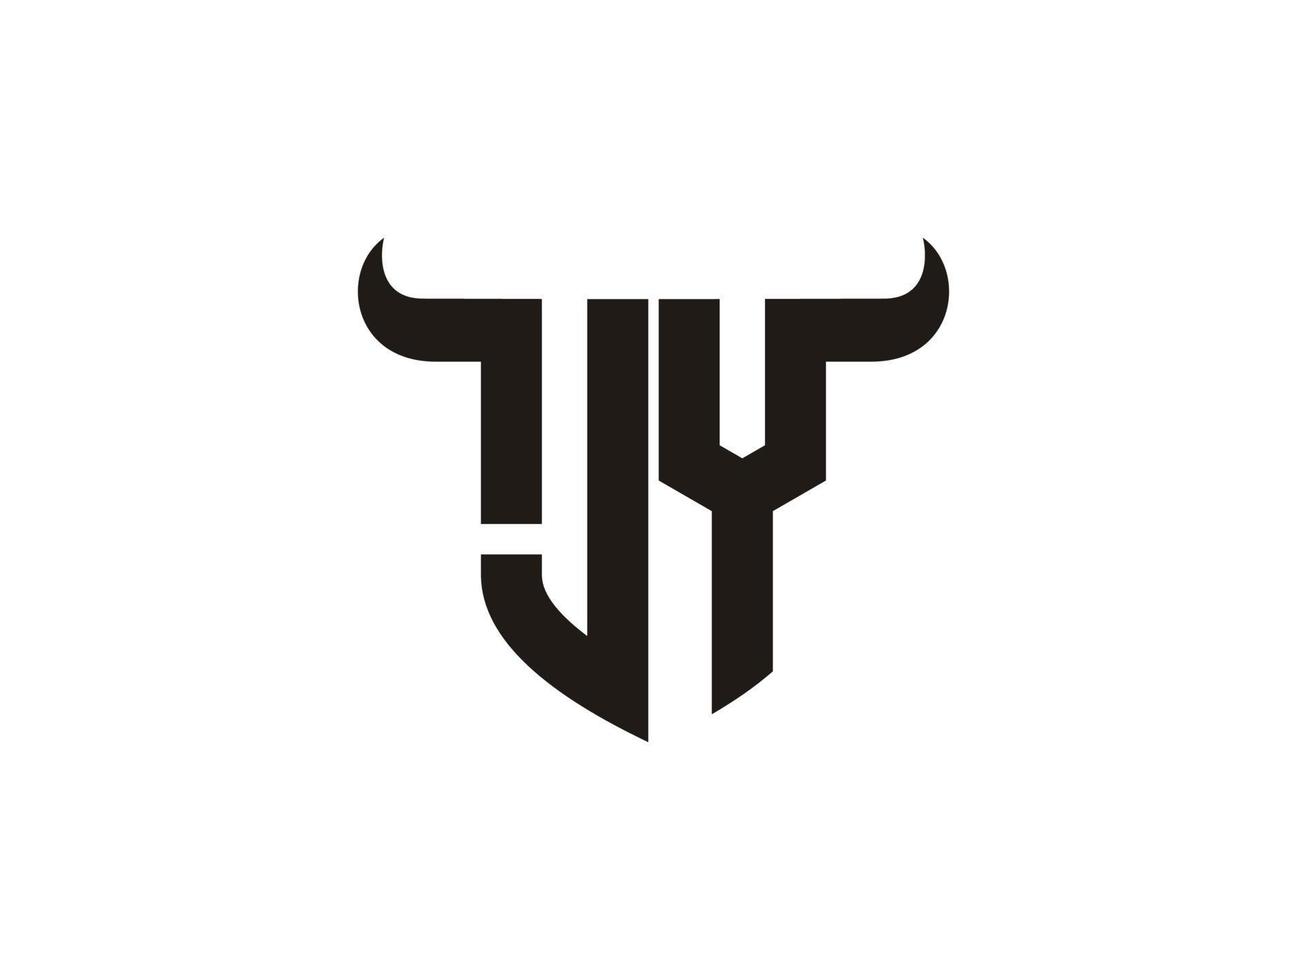 anfängliches jy bull-logo-design. vektor